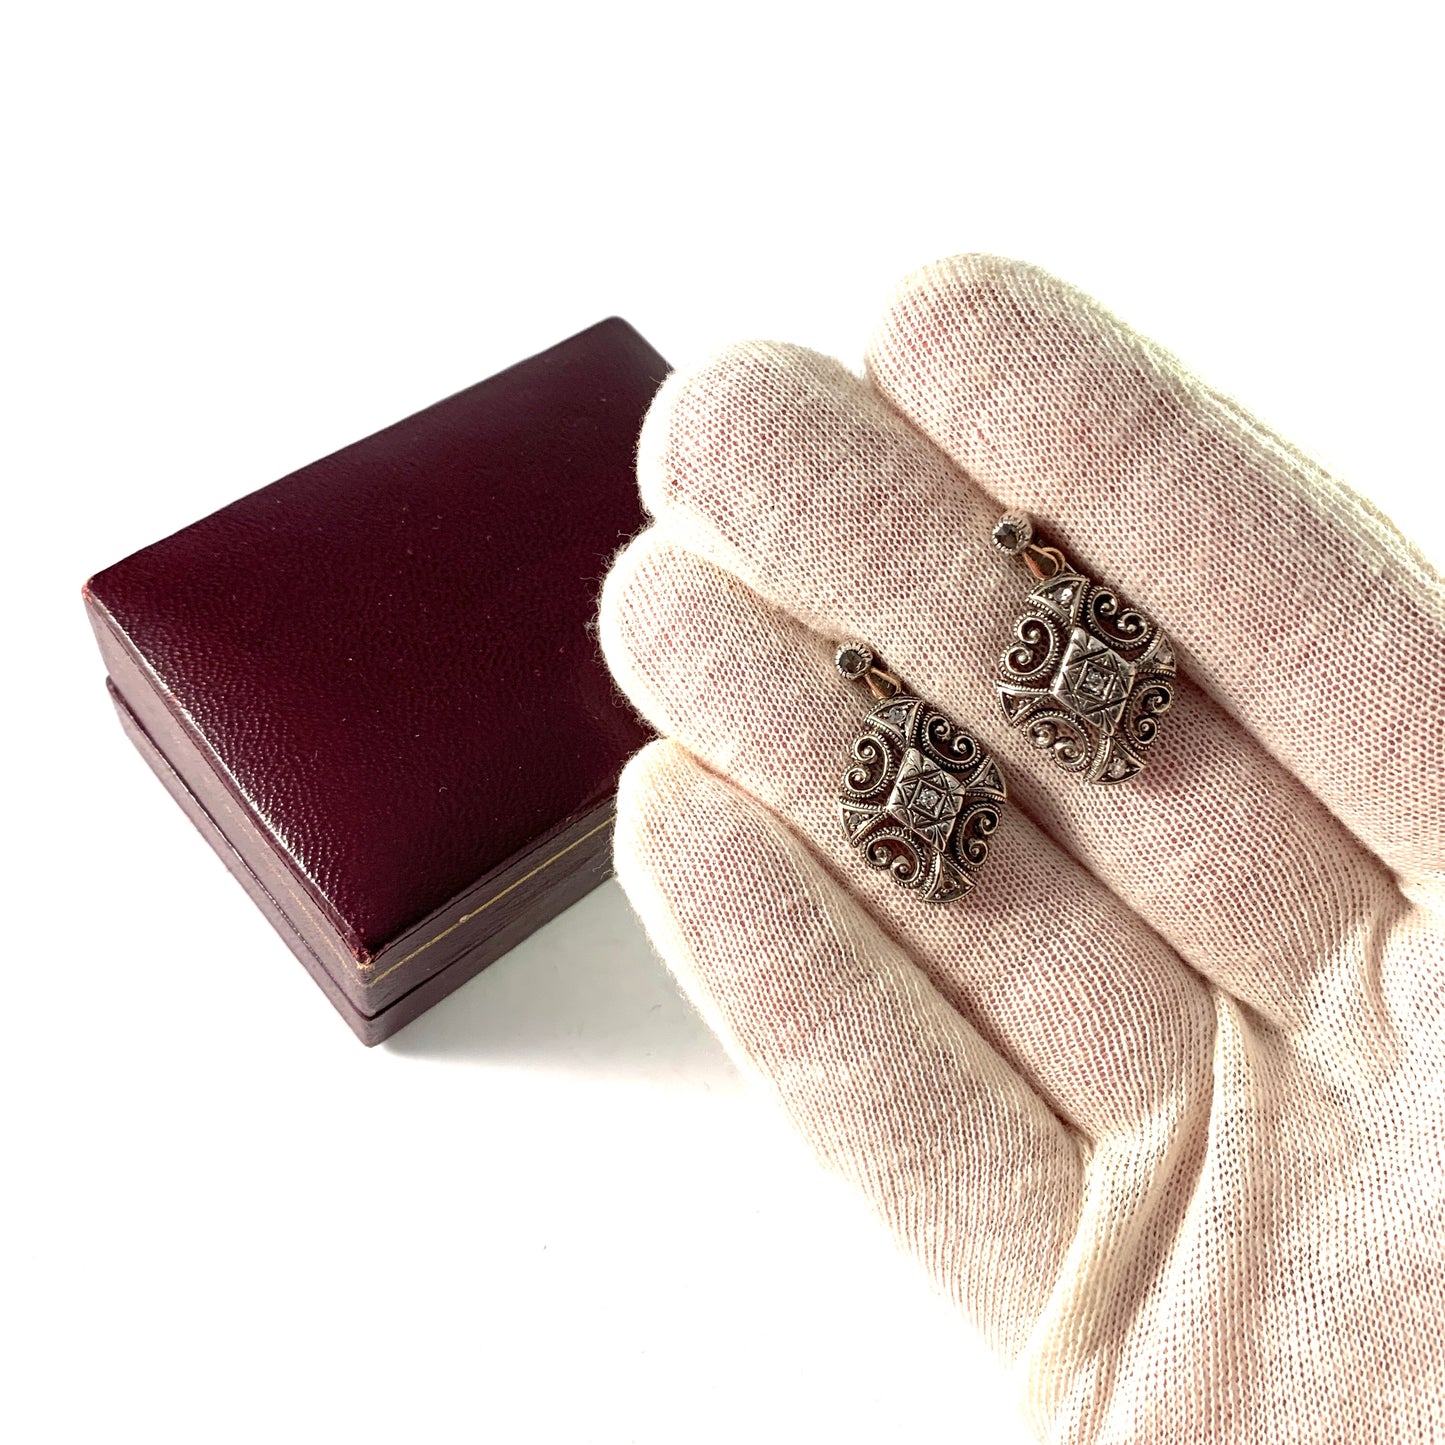 Portugal, Art Deco 1930s 18k Gold Silver Rose Cut Diamond Earrings. Boxed.